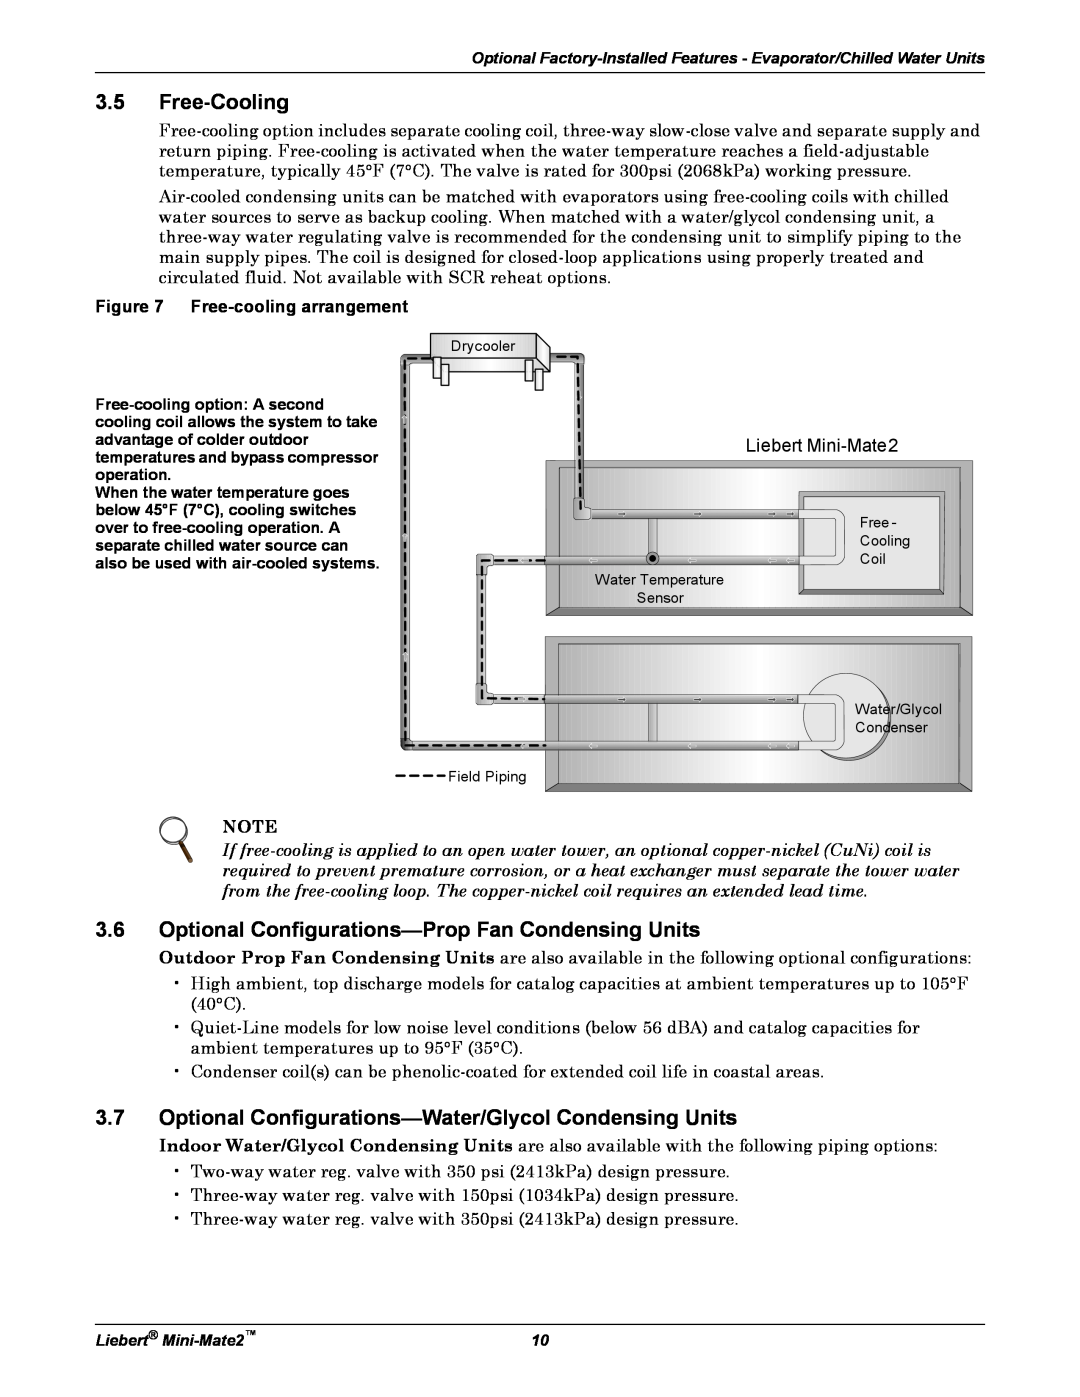 Emerson MINI-MATE2 user manual 3.5Free-Cooling 